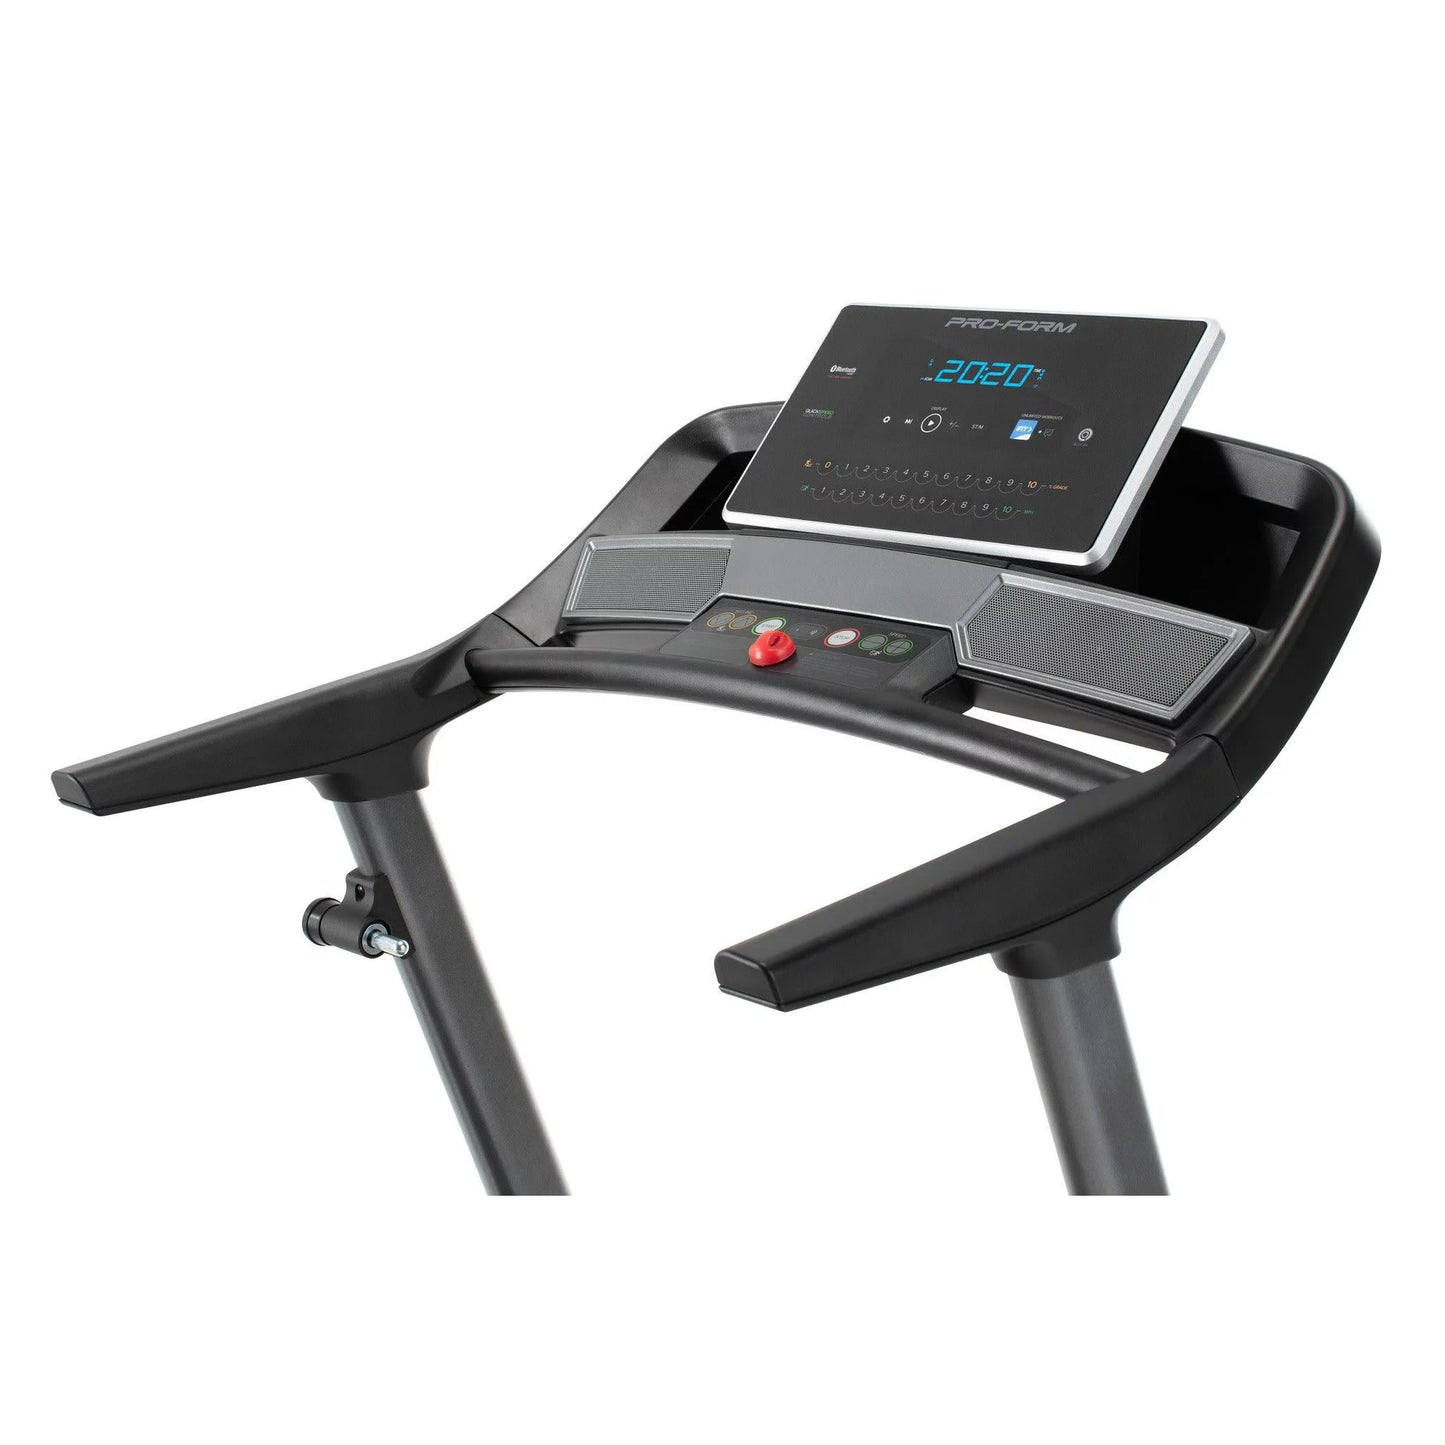 ProForm - Cadence Compact 500 Folding Treadmill